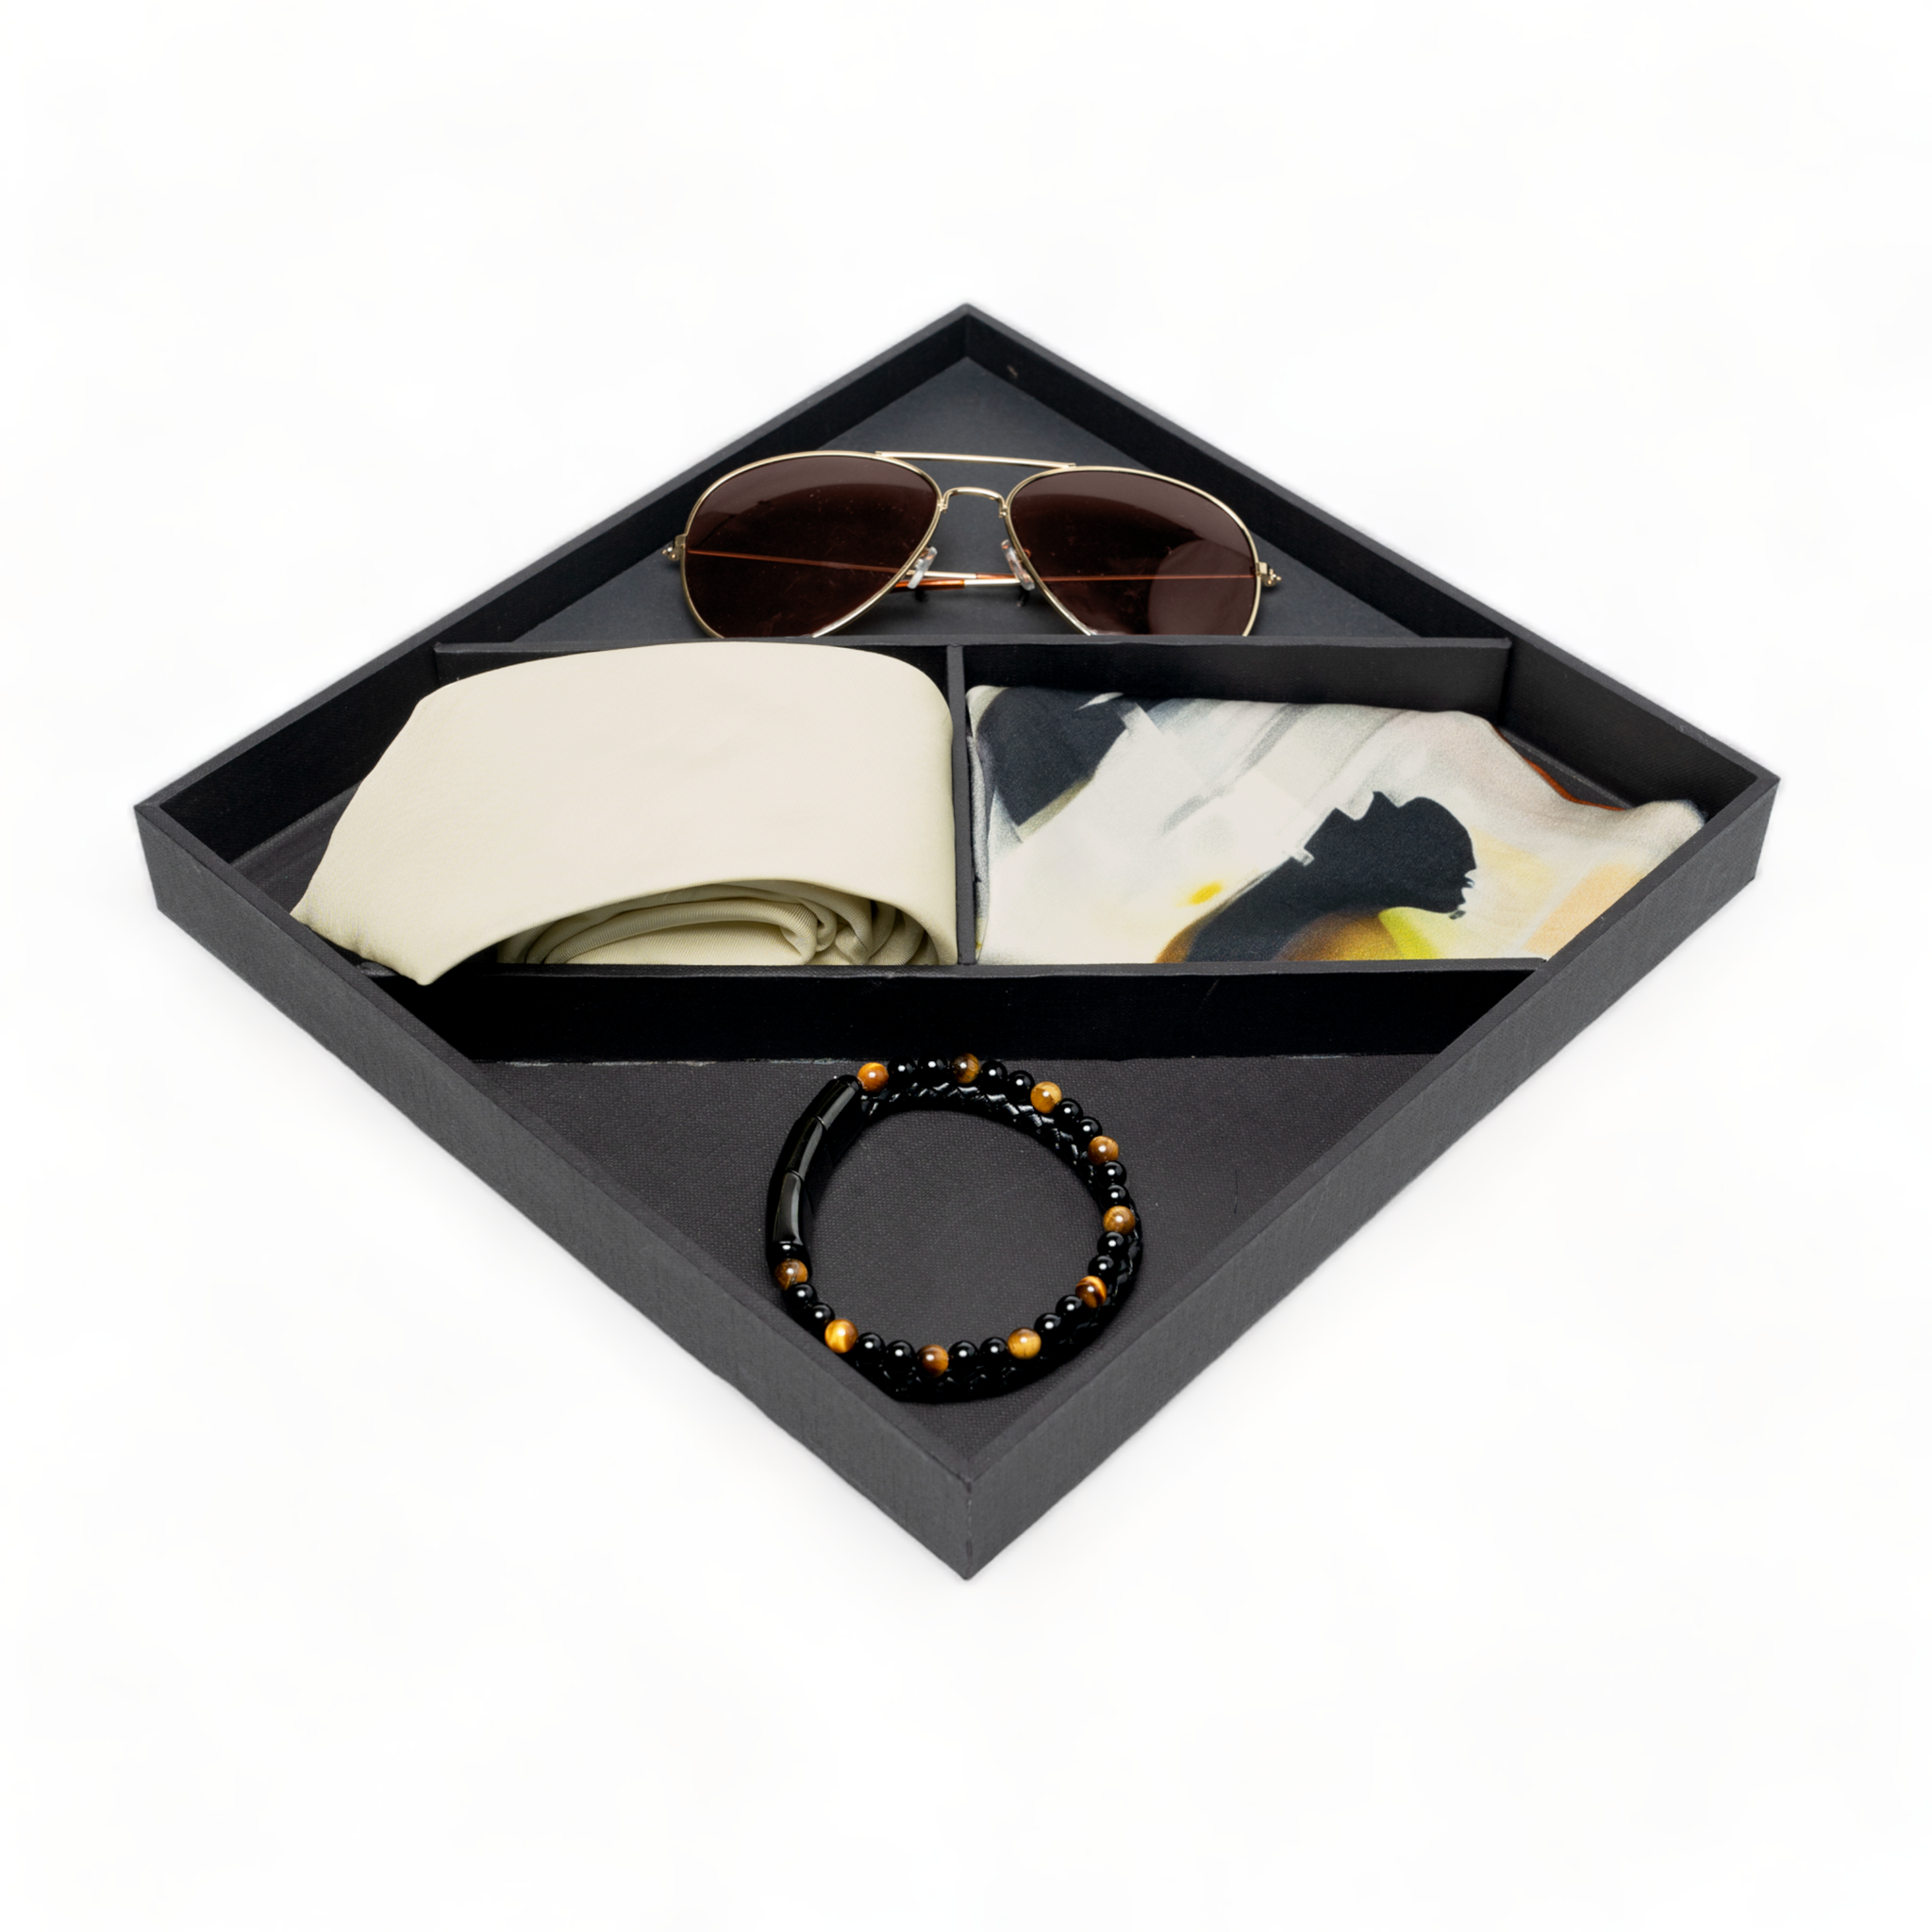 Chokore Special 4-in-1 Gift Set for Him (Pocket Square, Necktie, Sunglasses, & Bracelet)